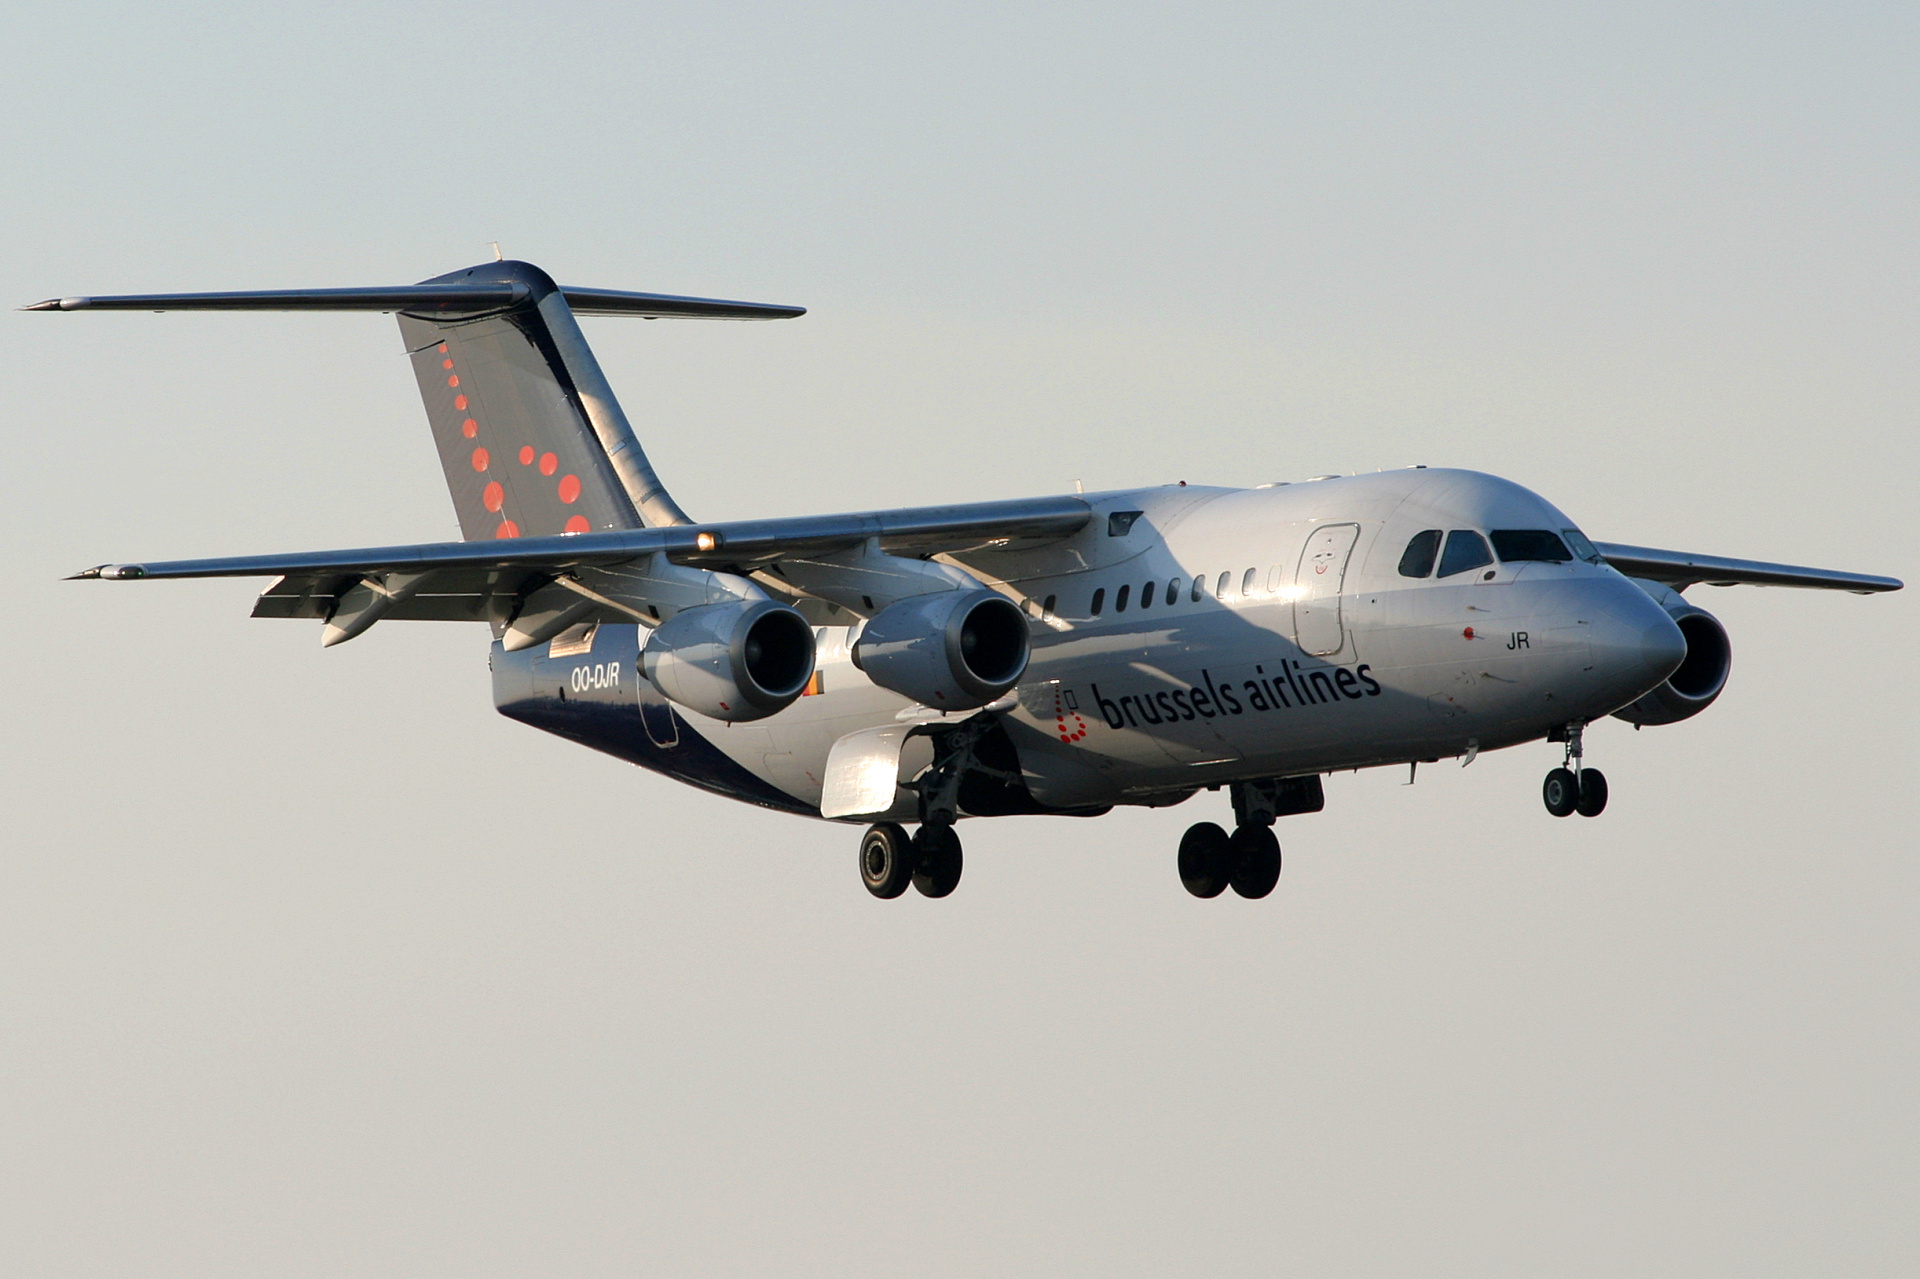 OO-DJR (Samoloty » Spotting na EPWA » BAe 146 i pochodne wersje » Avro RJ85 » Brussels Airlines)